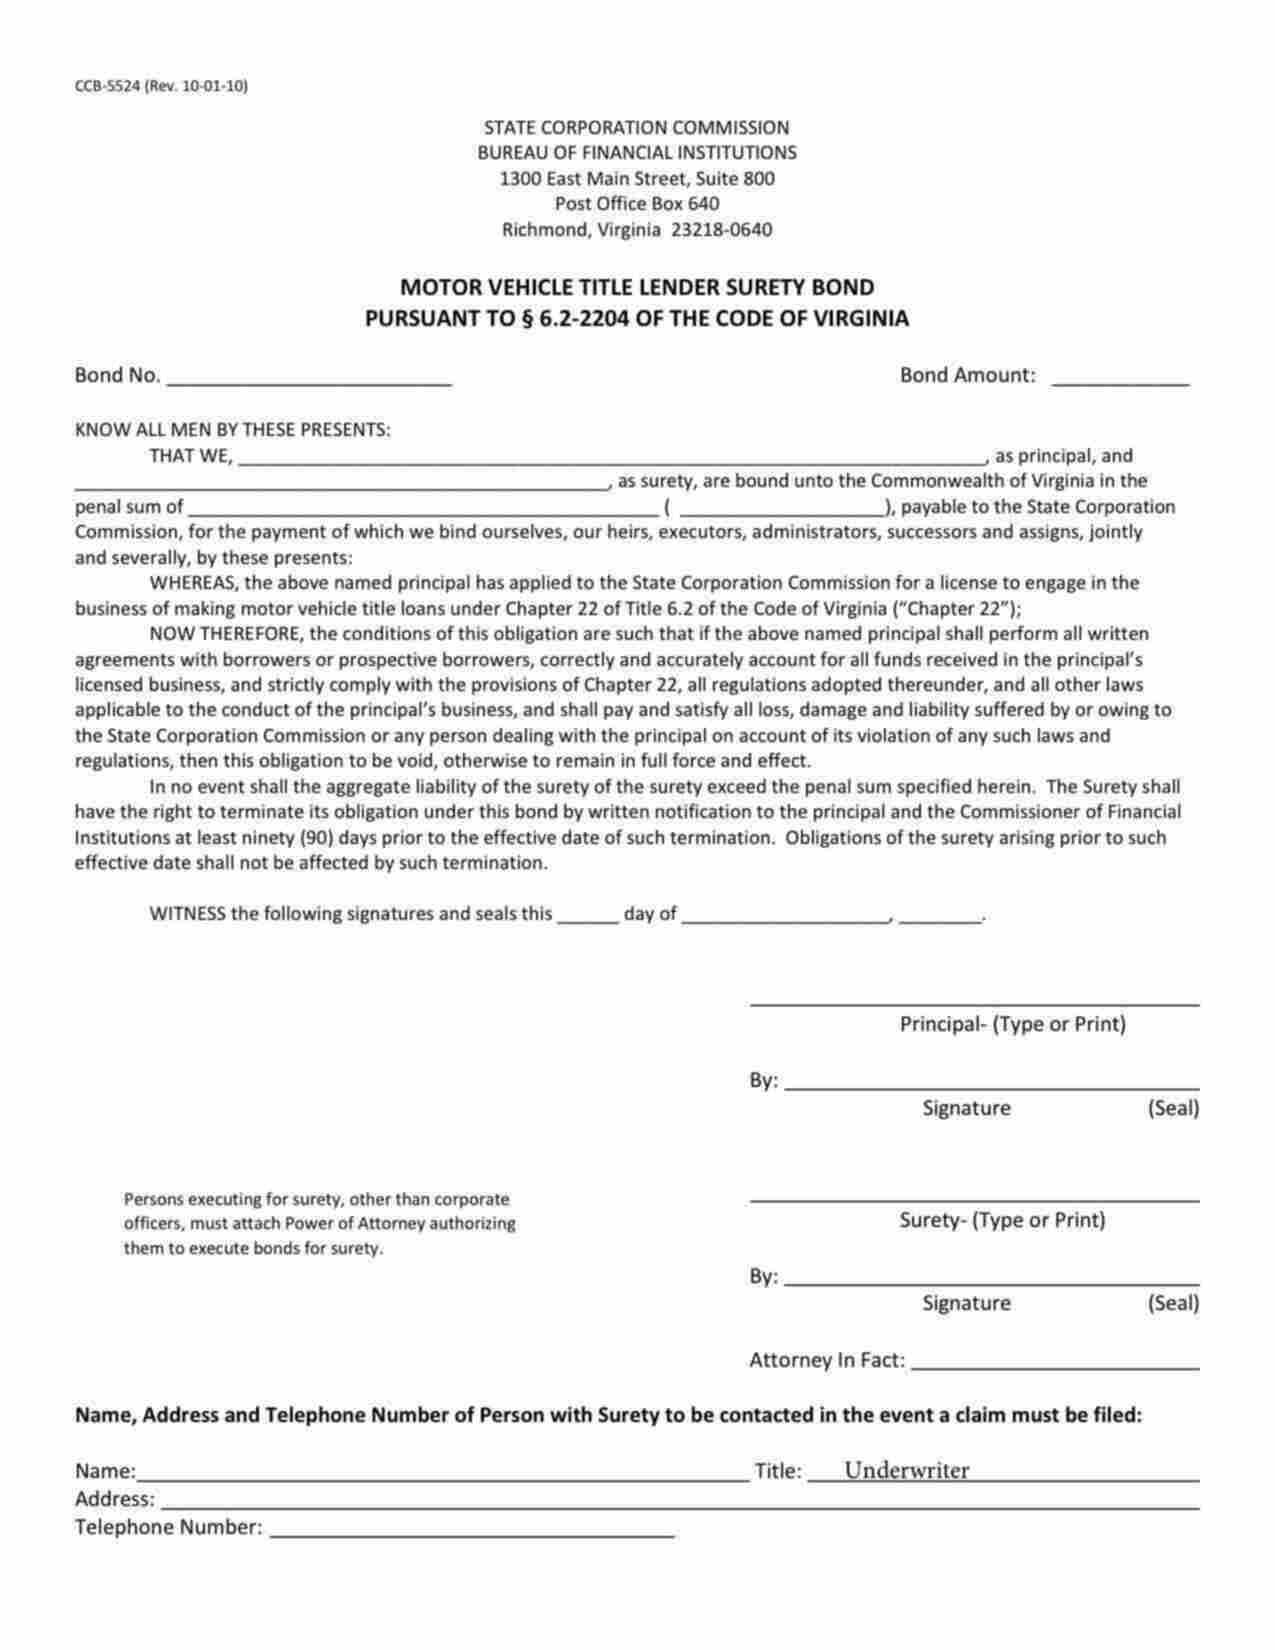 Virginia Motor Vehicle Title Lender Bond Form